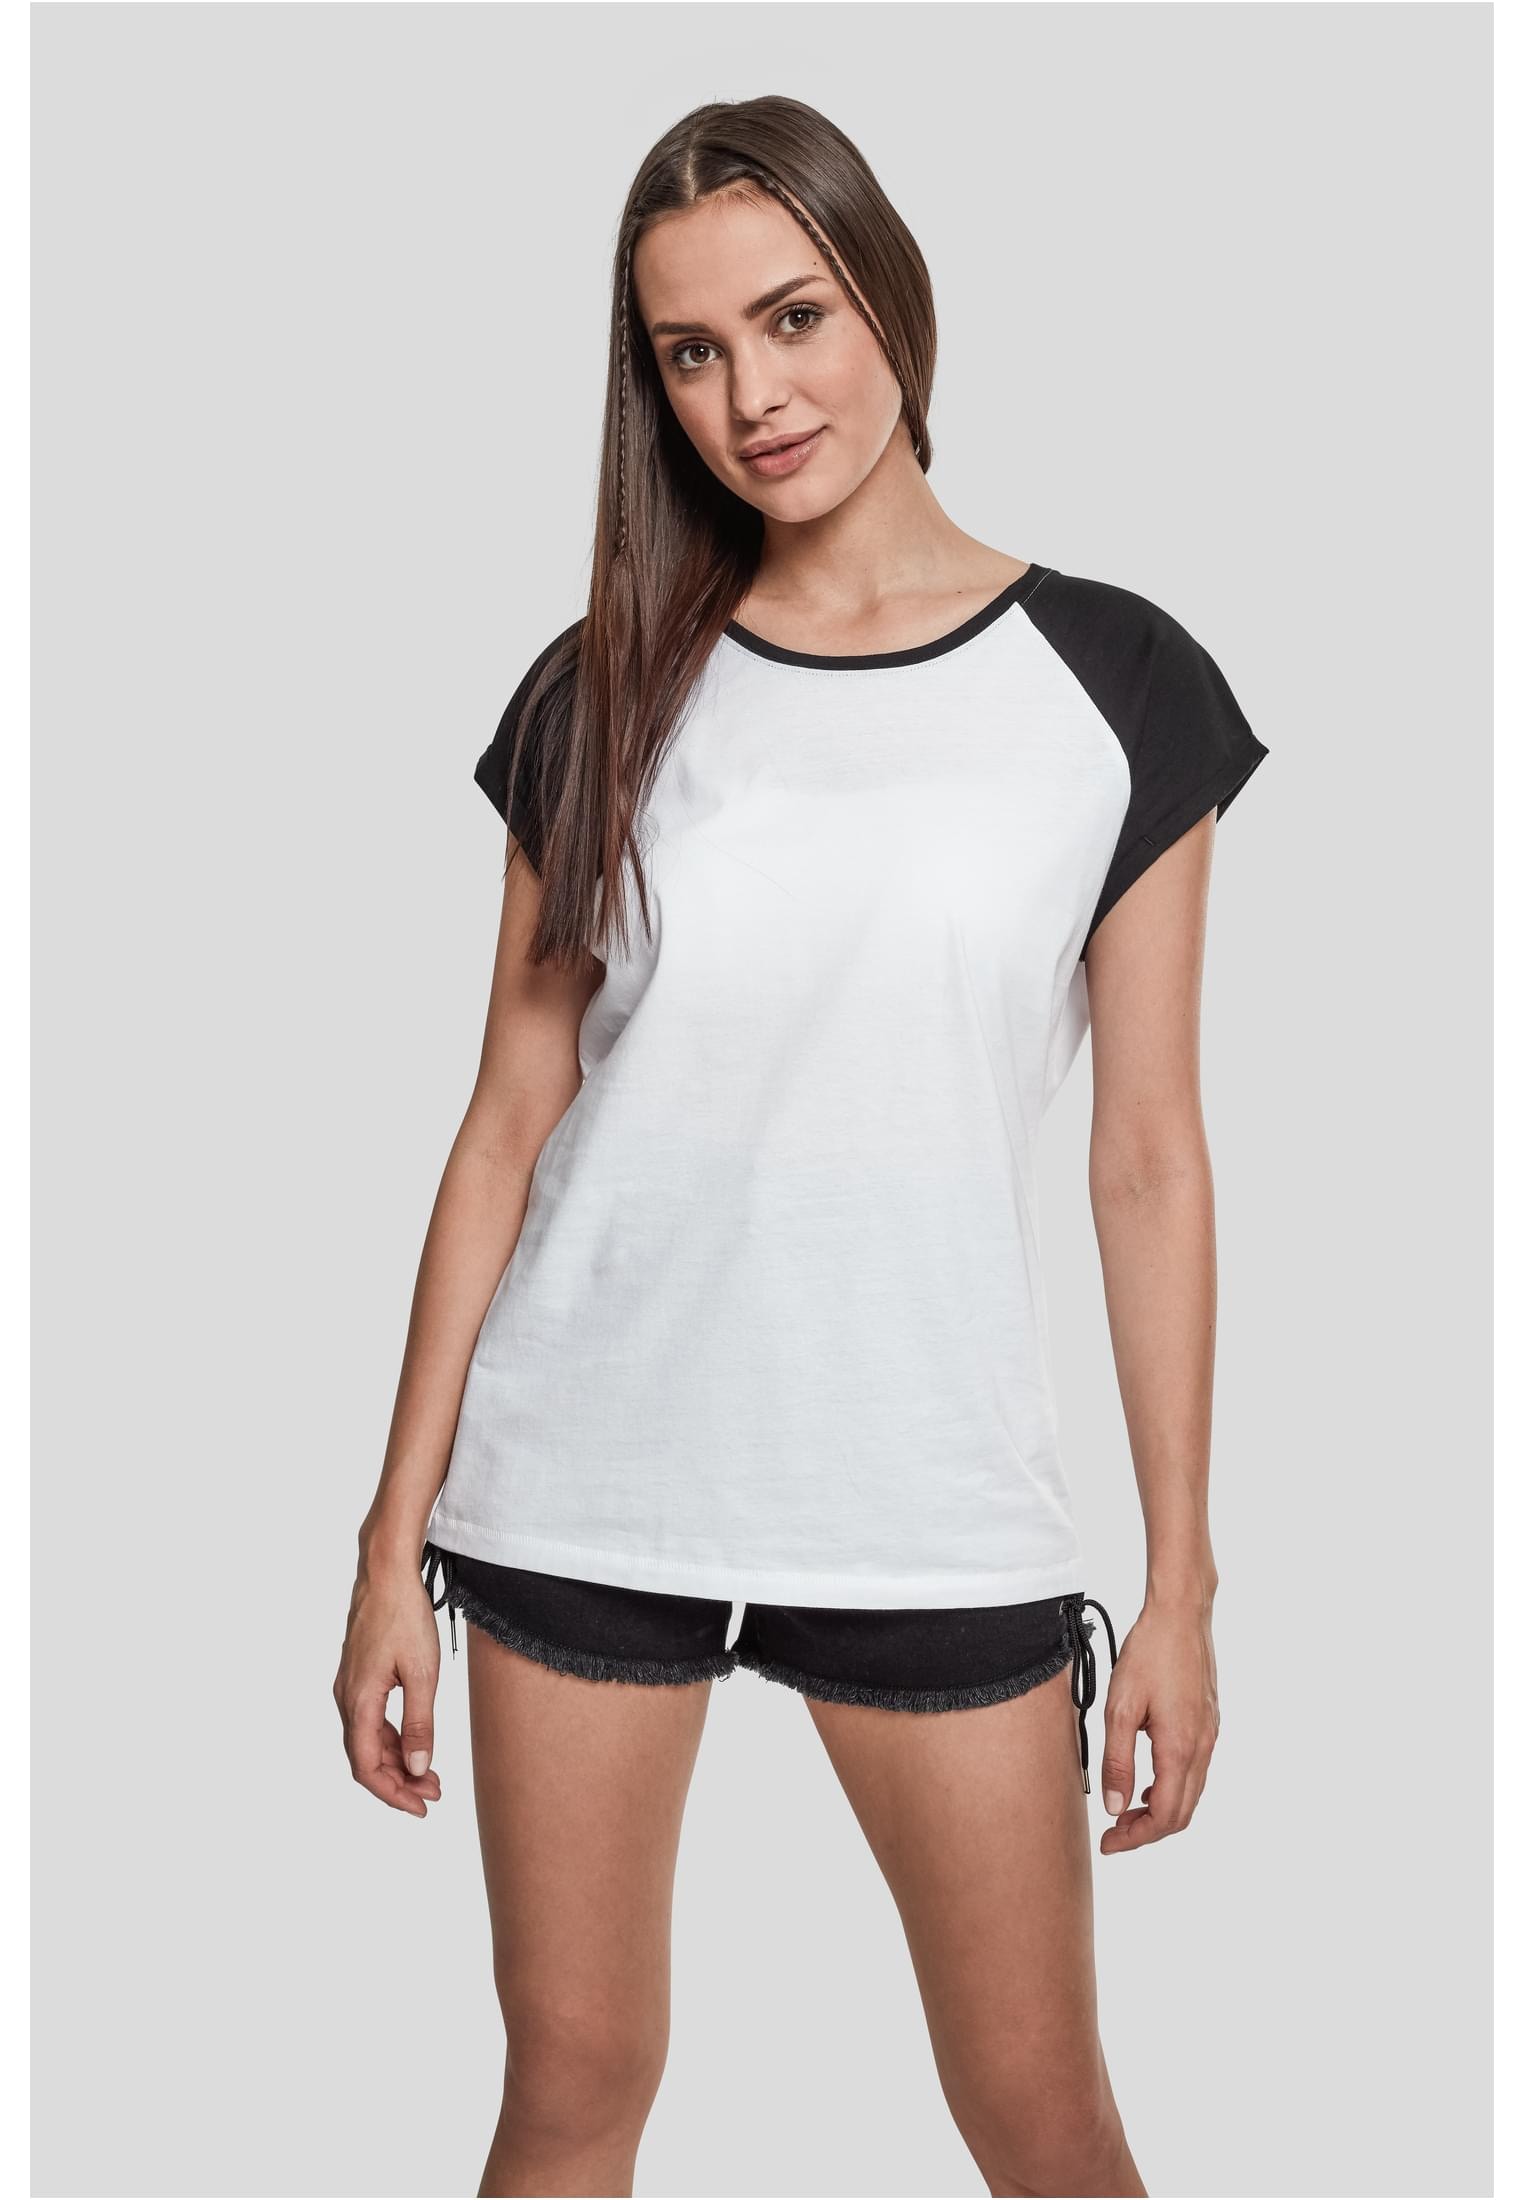 URBAN CLASSICS Kurzarmshirt »Damen Ladies Raglan kaufen online (1 Tee«, Contrast tlg.)